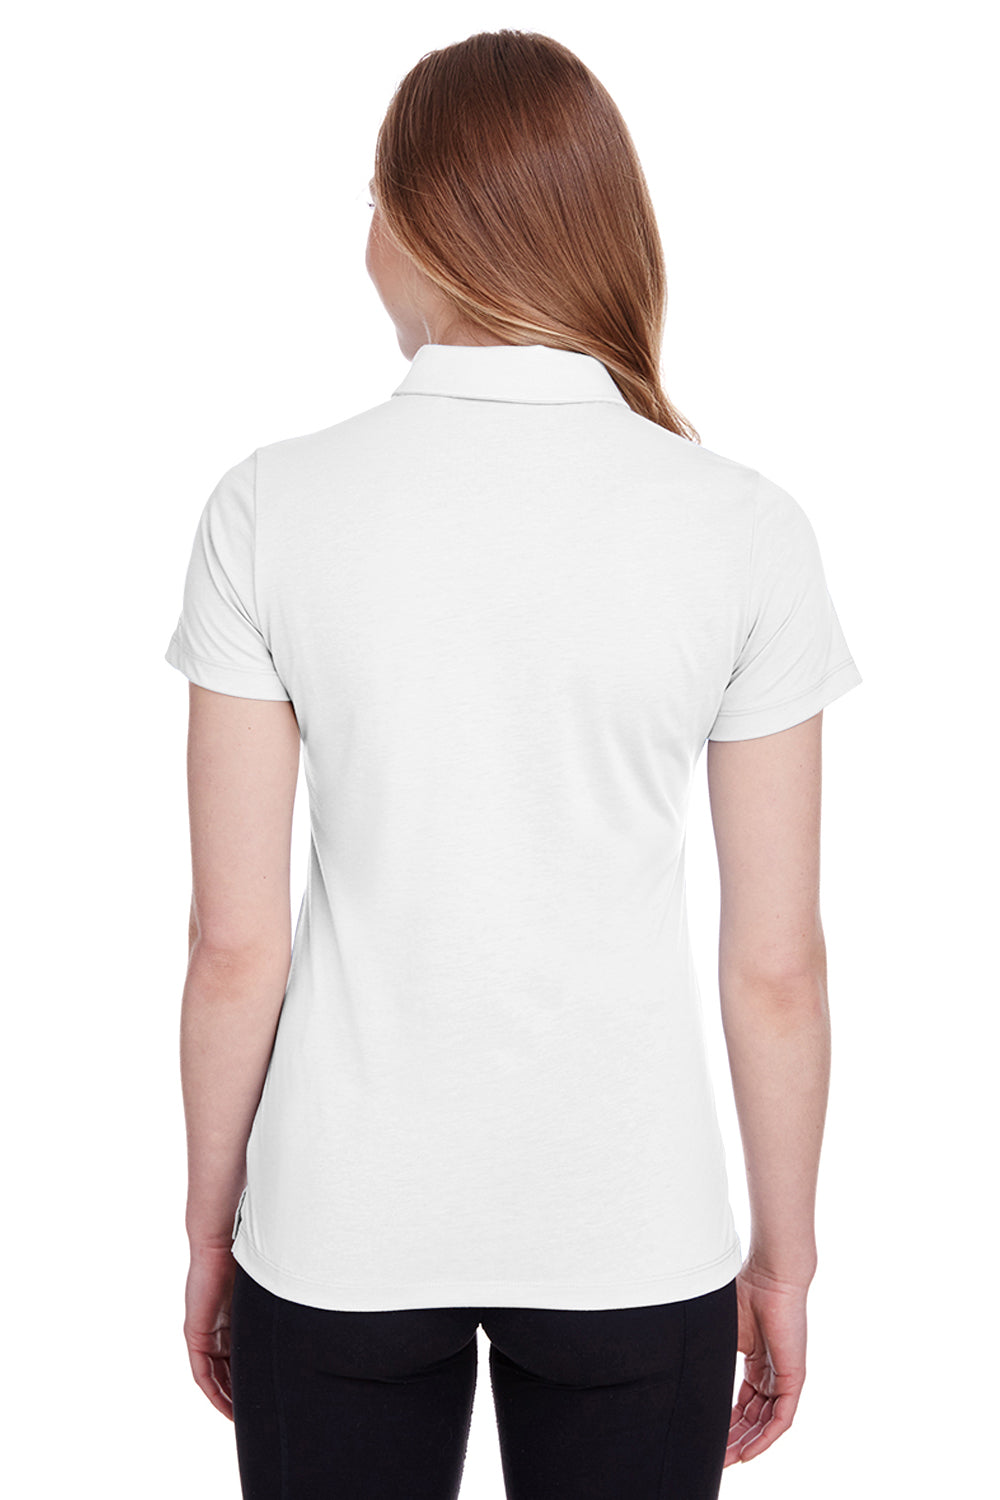 Puma 596921 Womens Fusion Performance Moisture Wicking Short Sleeve Polo Shirt White Back